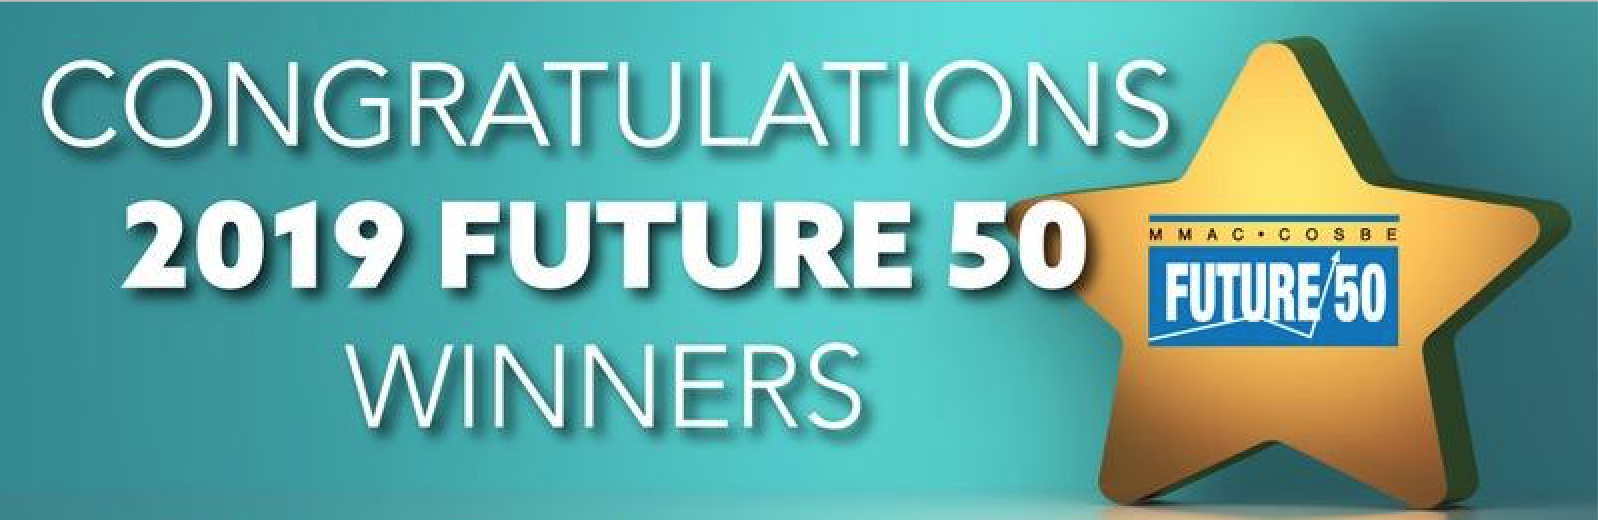 Congratulations Future 50 Winners!